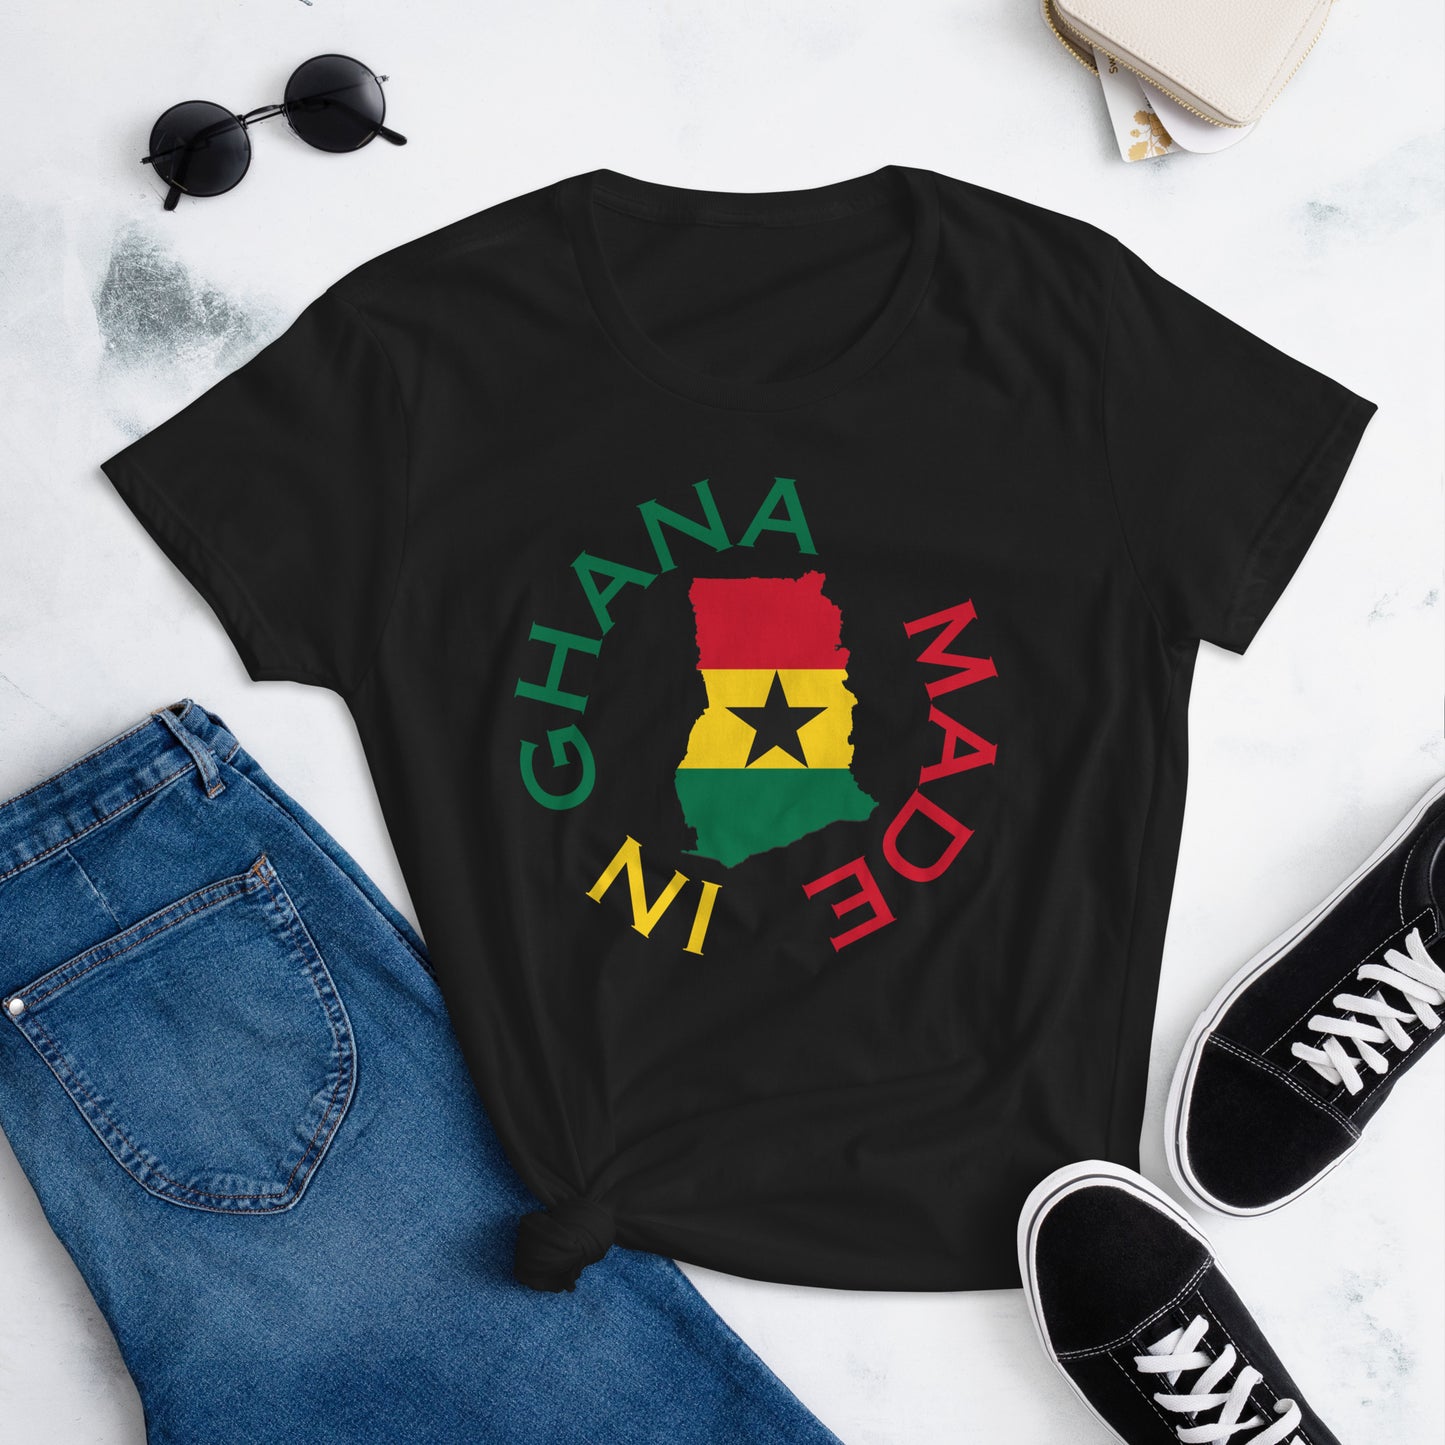 Made in Ghana Women's T-shirt